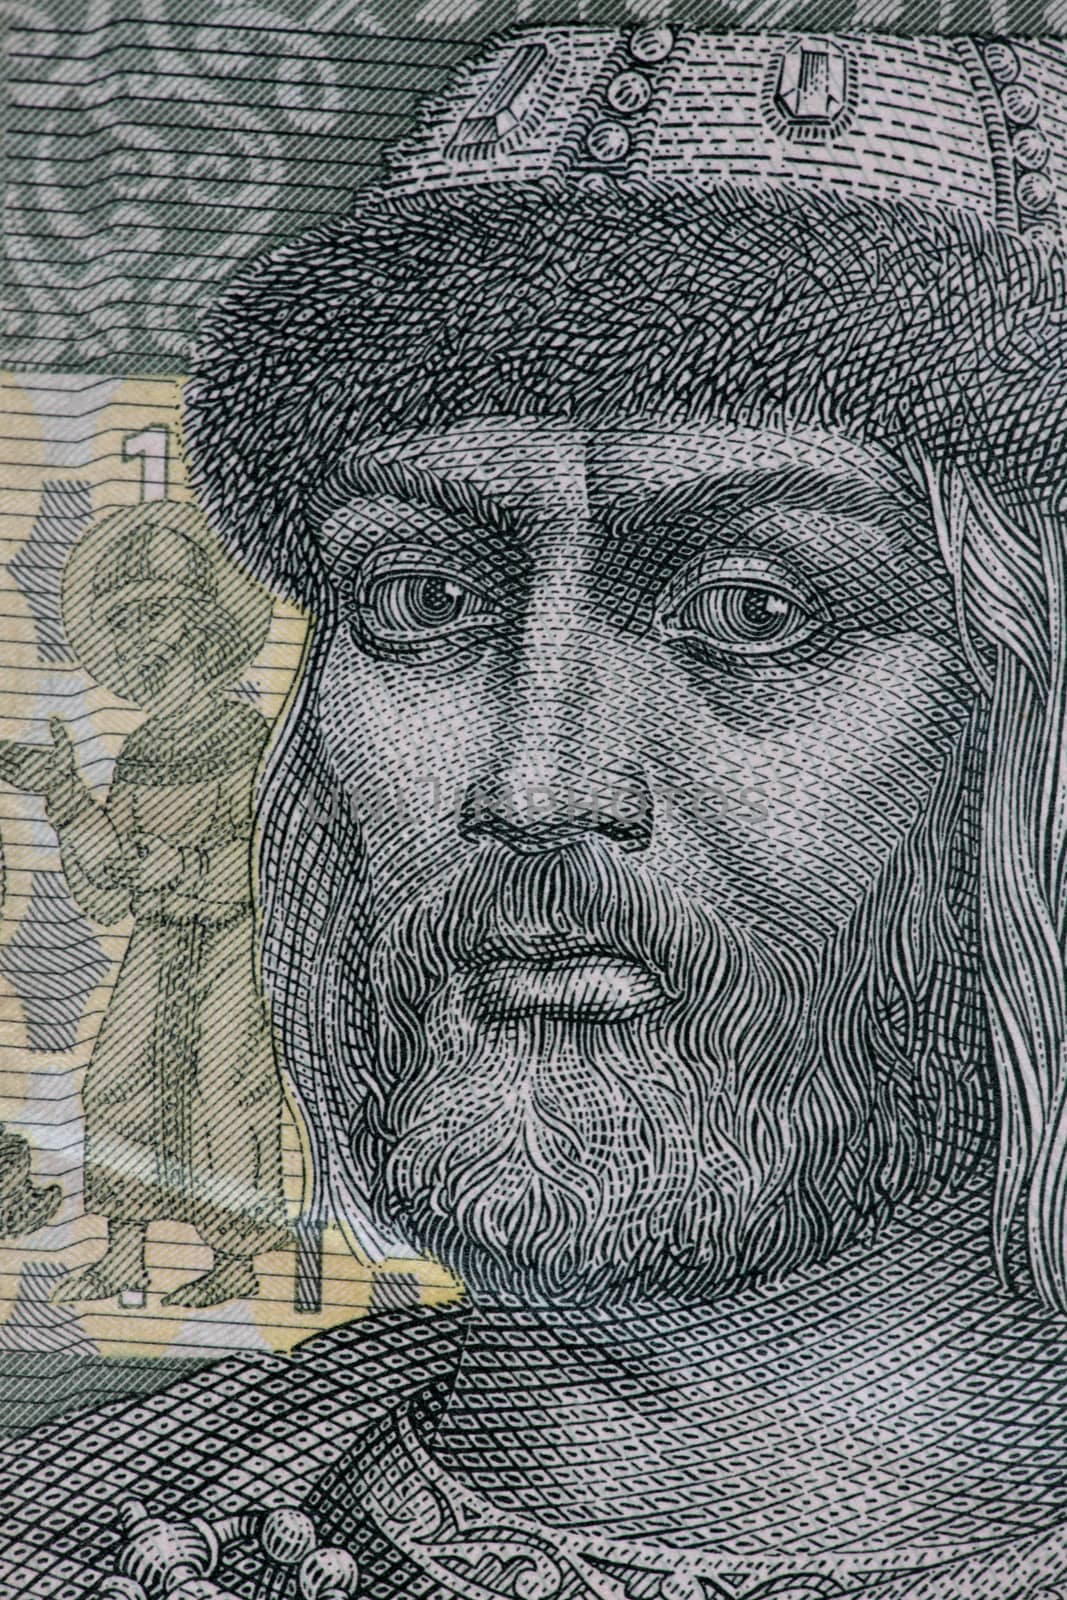 Prince Vladimir portrait by mrivserg